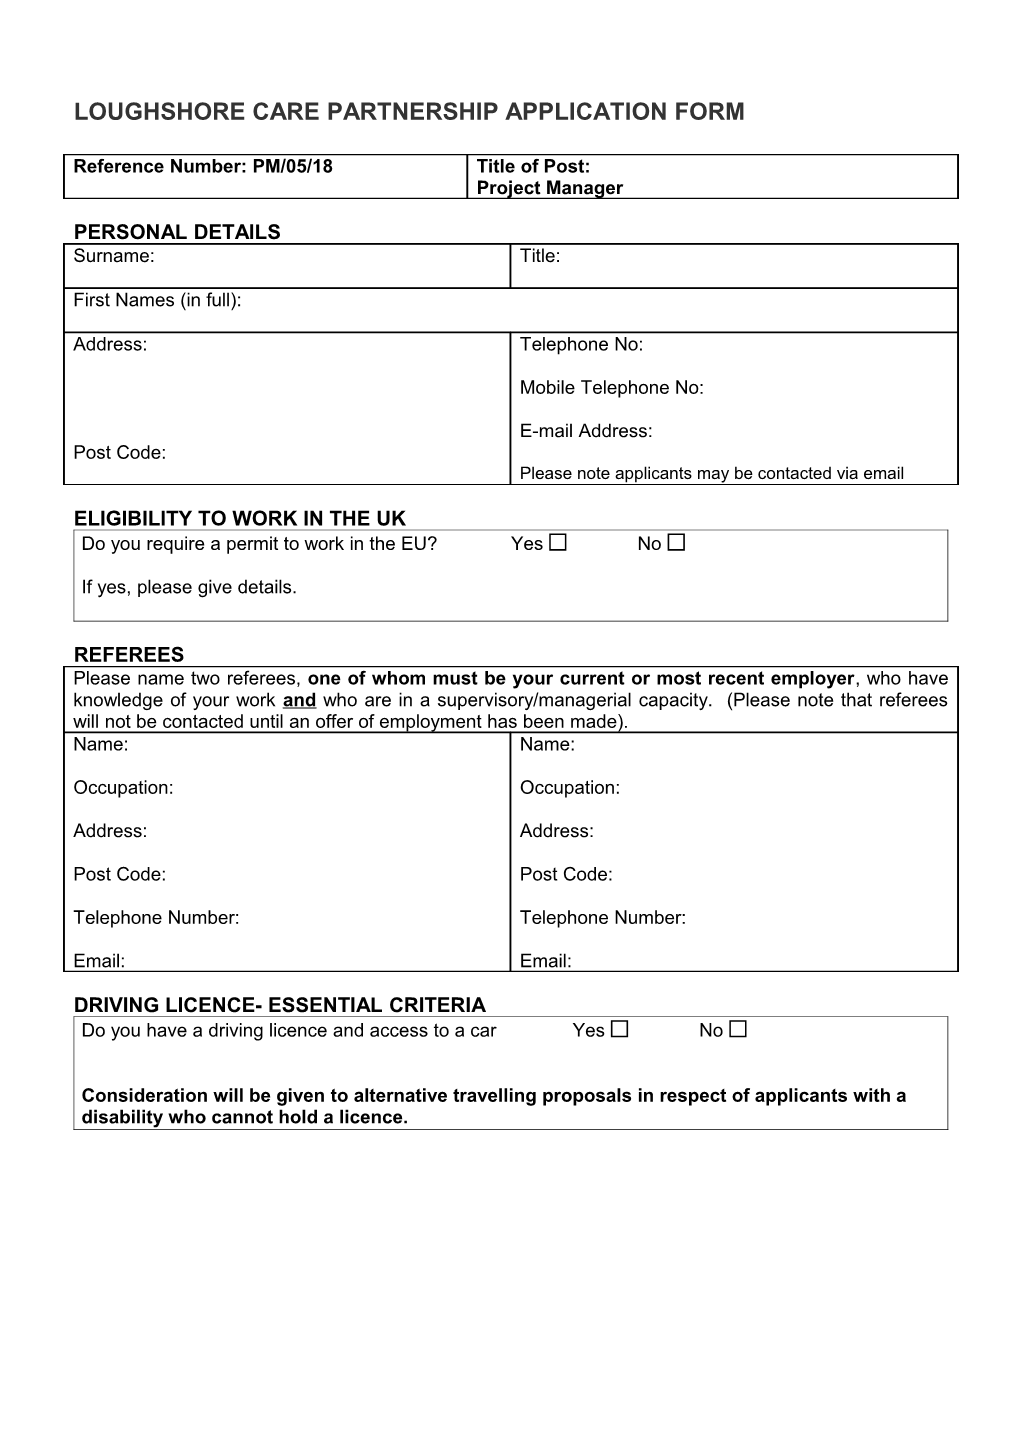 Loughshore Care Partnership Application Form